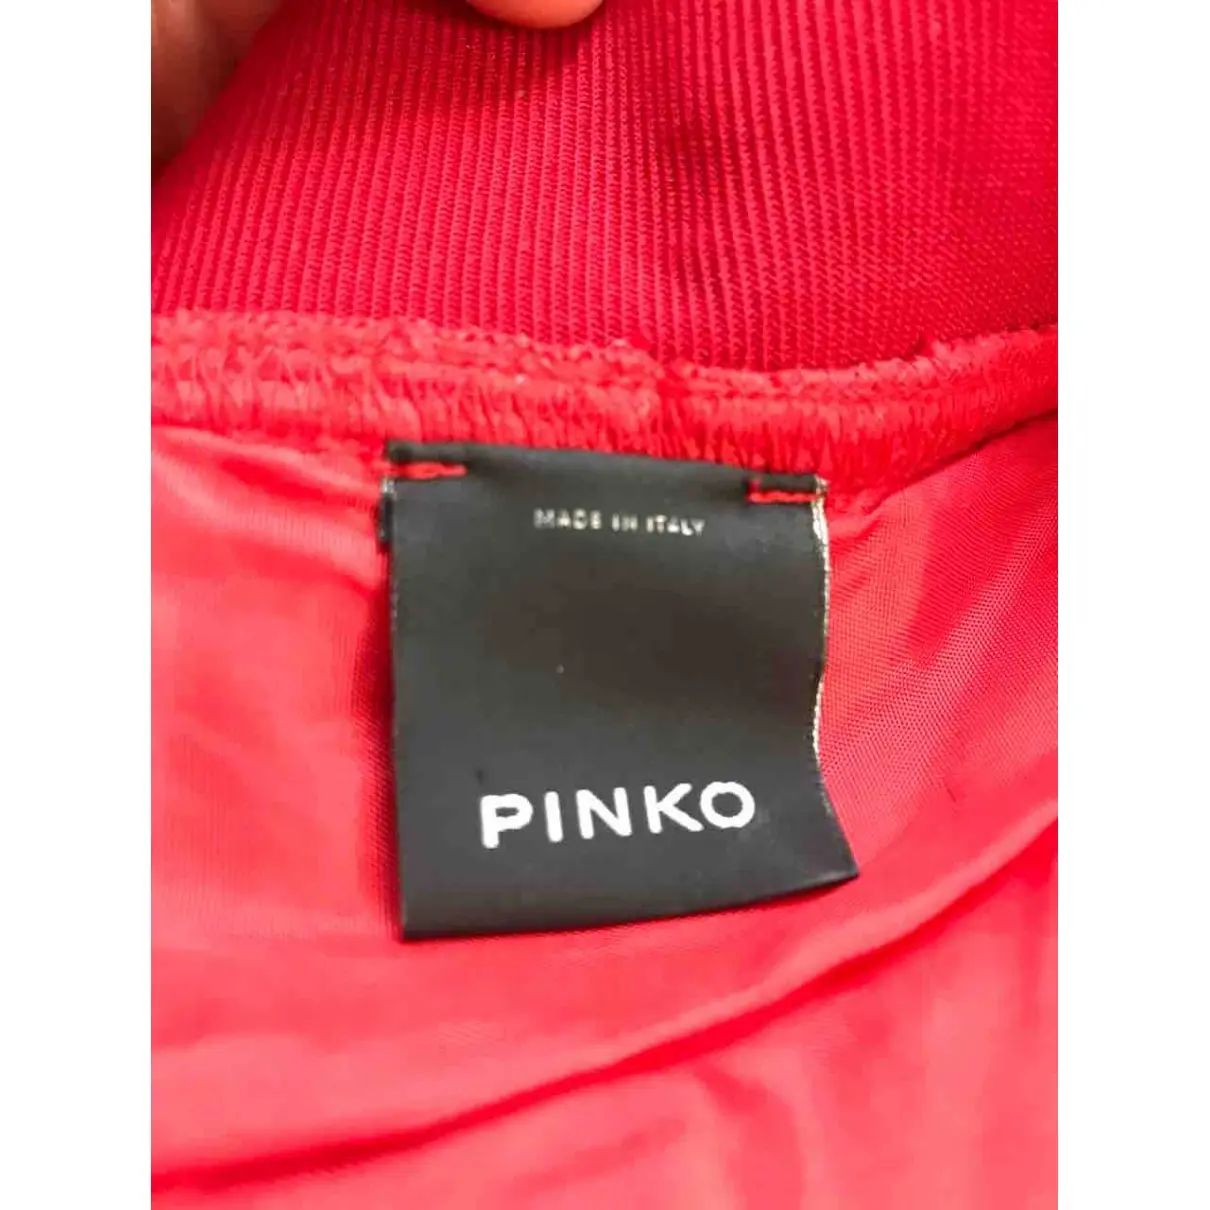 Buy Pinko Skirt online